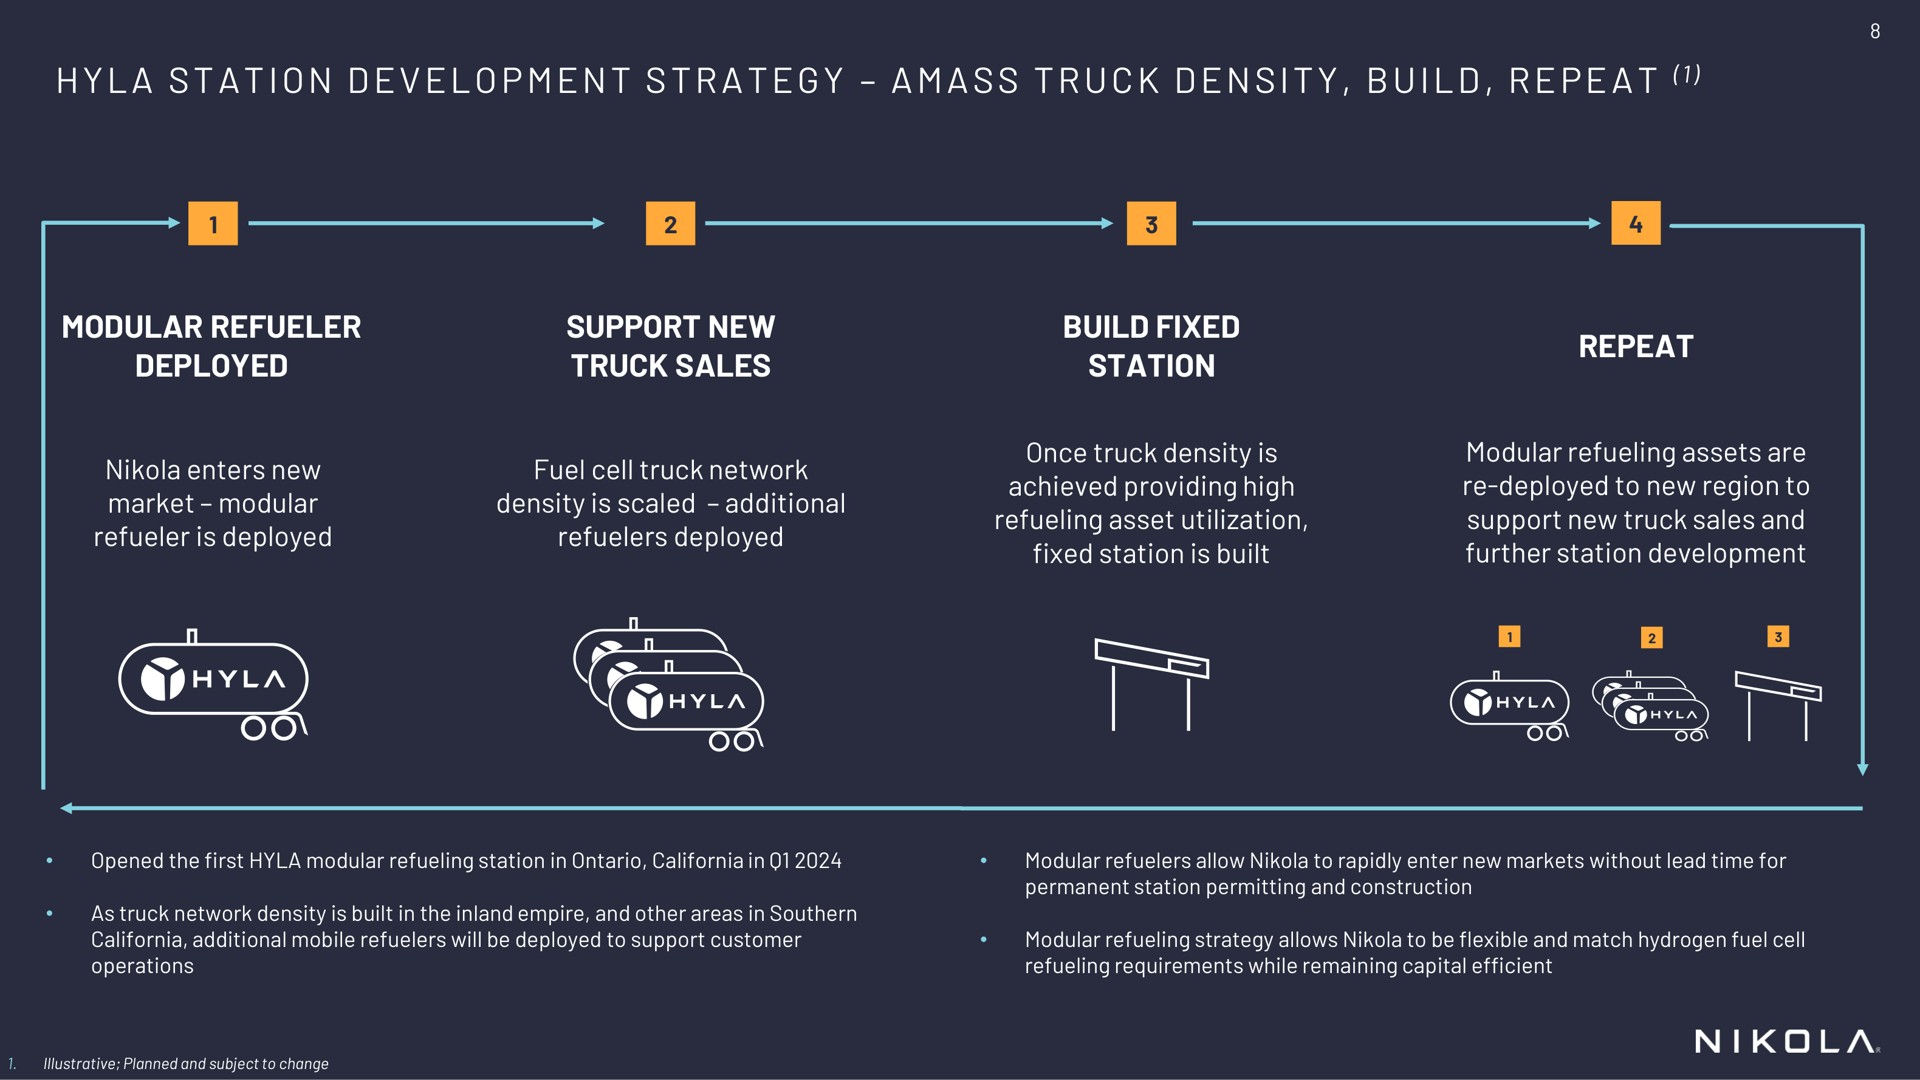 a a i a a a i i a modular deployed support new truck sales build fixed station repeat development strategy amass density | Nikola